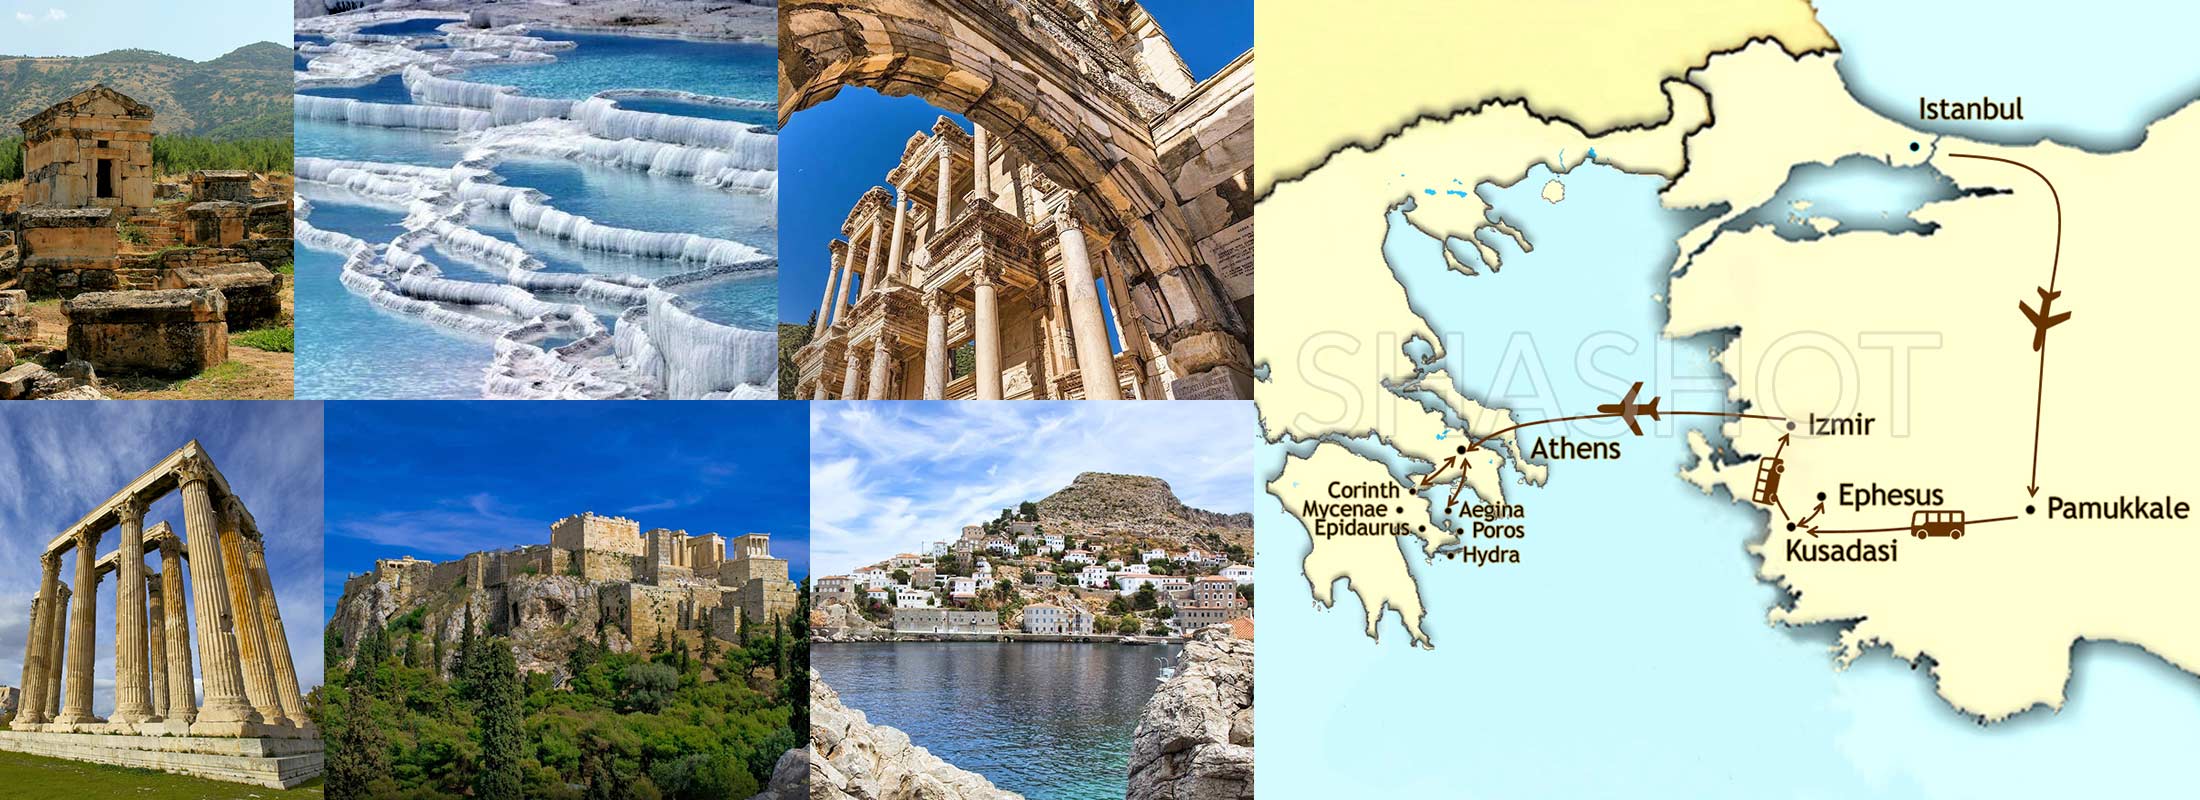 6-DAYS-TURKEY-GREECE-PACKAGE-TOUR-EPHESUS-PAMUKKALE-ATHENS-AEGINA-HYDRA-POROS-CORINTO-map